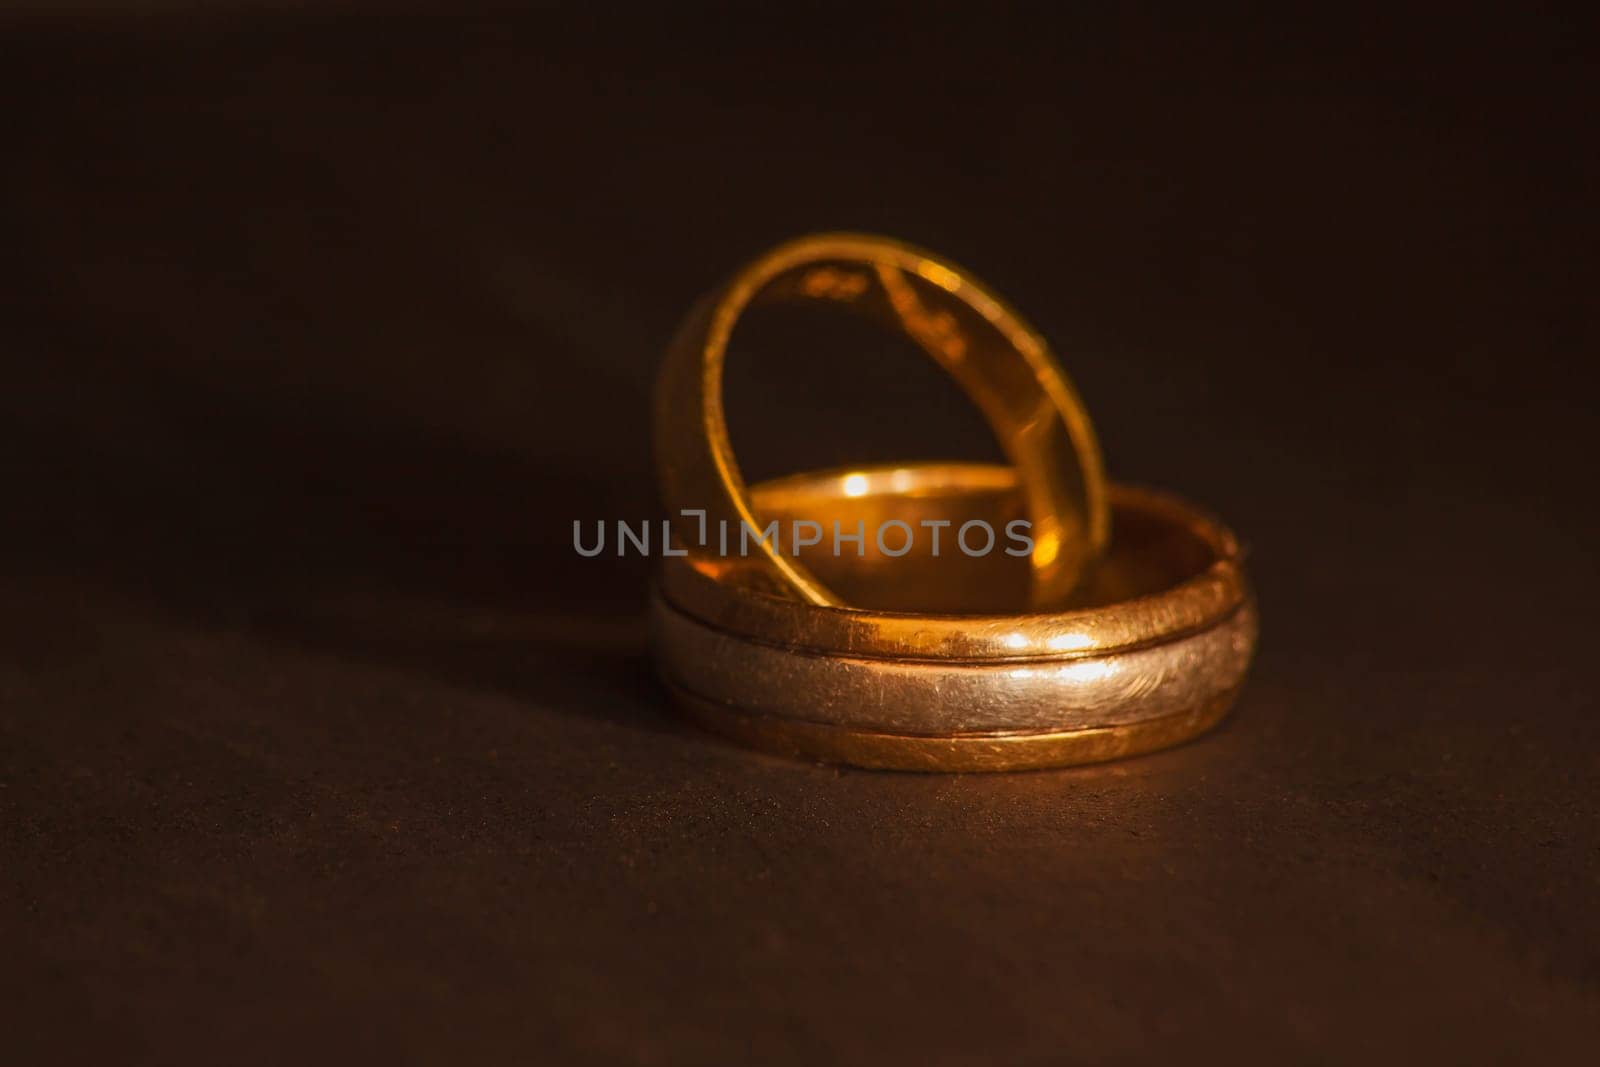 Well worn wedding bands 15424 by kobus_peche